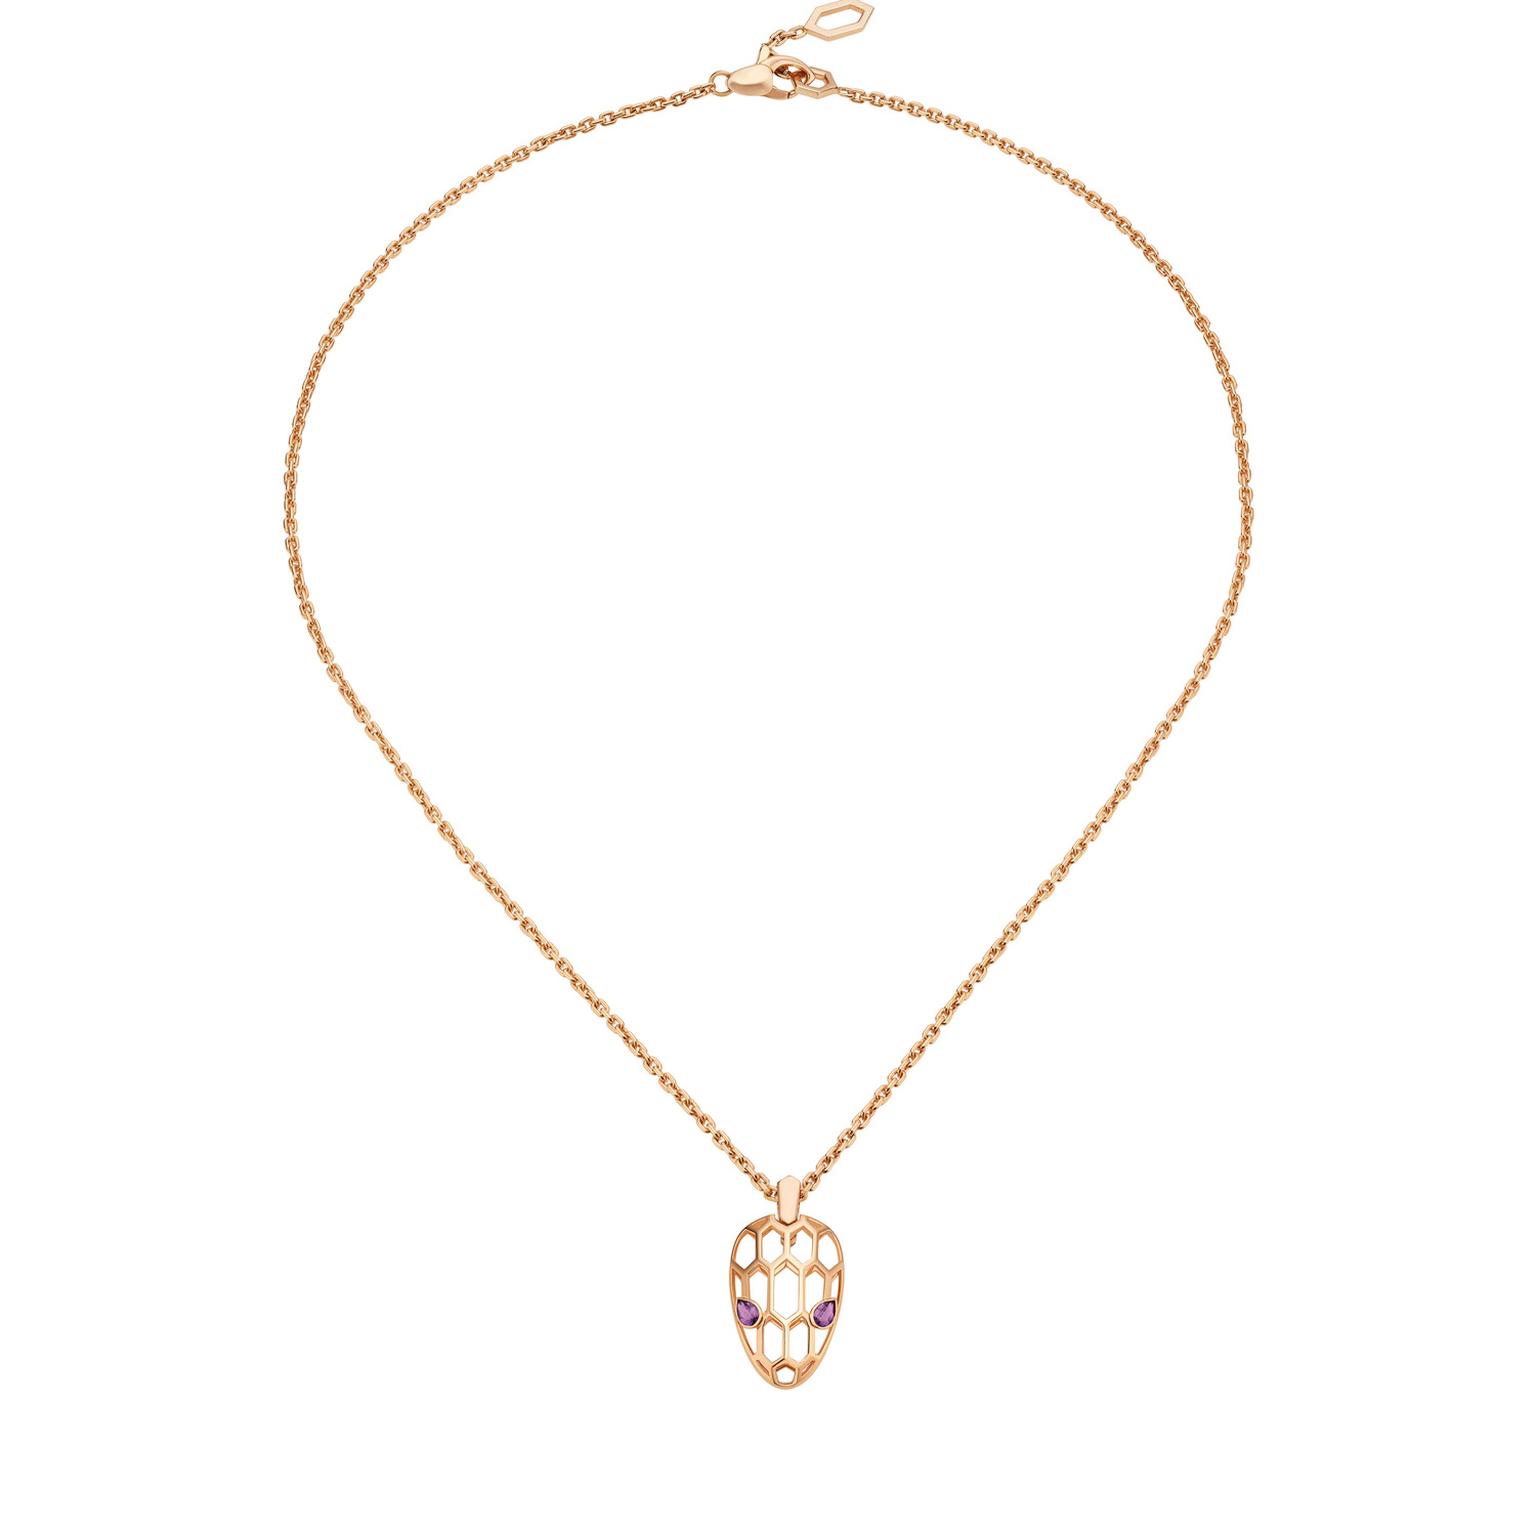 Bulgari Serpanti Seduttori necklace in rose gold with amethysts